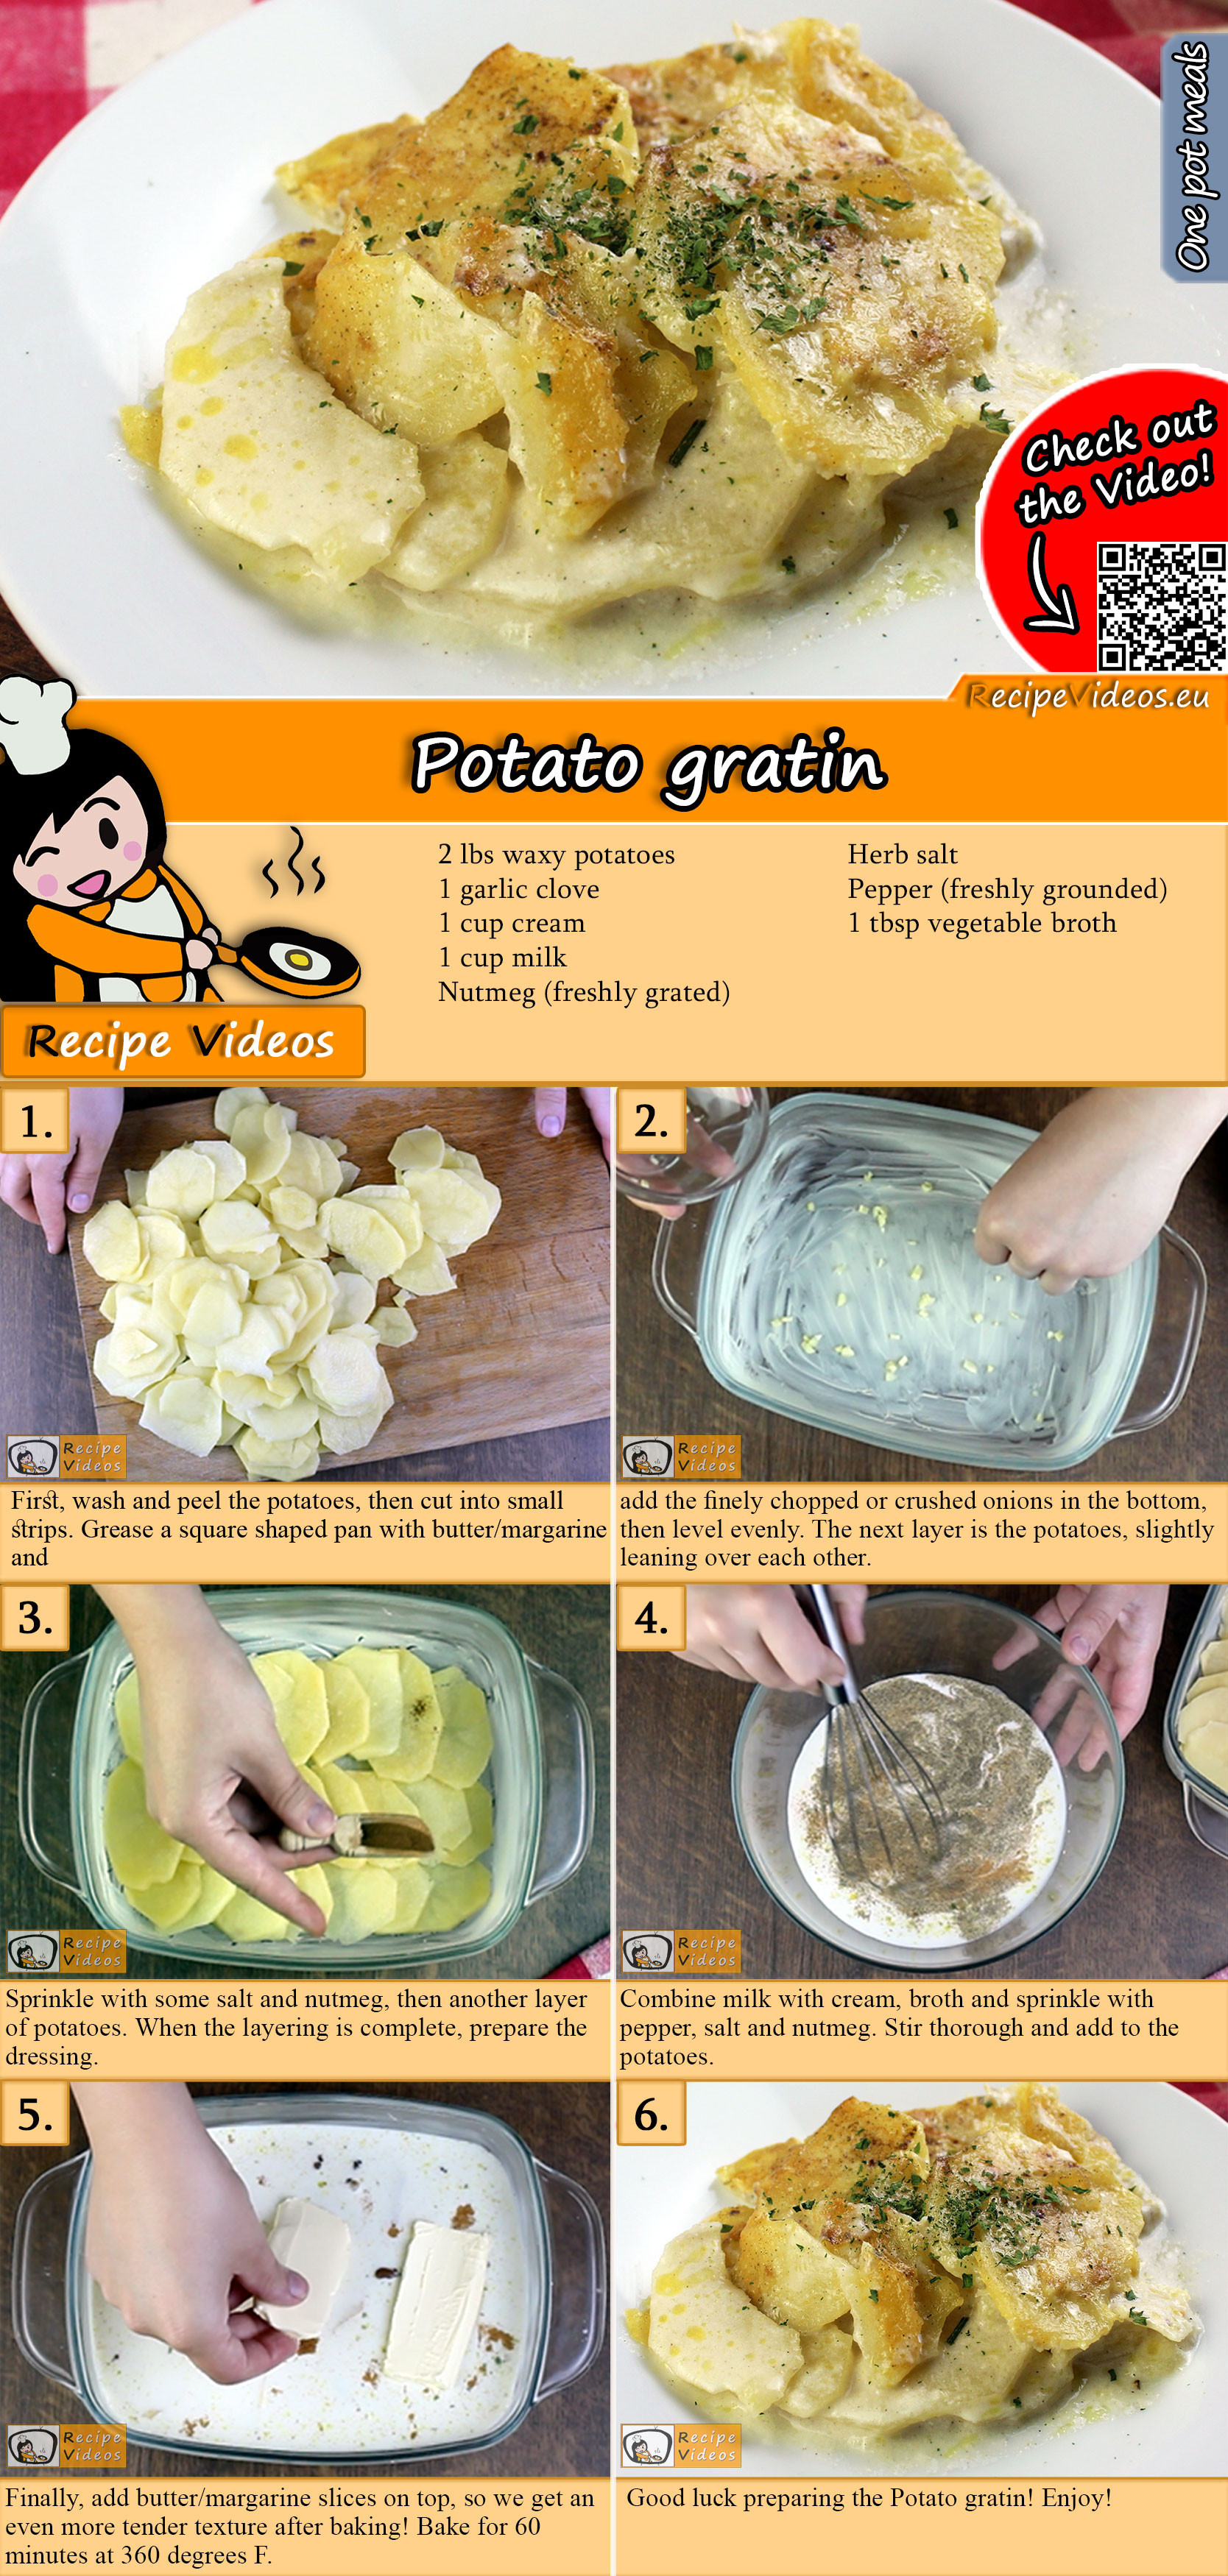 Potato gratin recipe with video